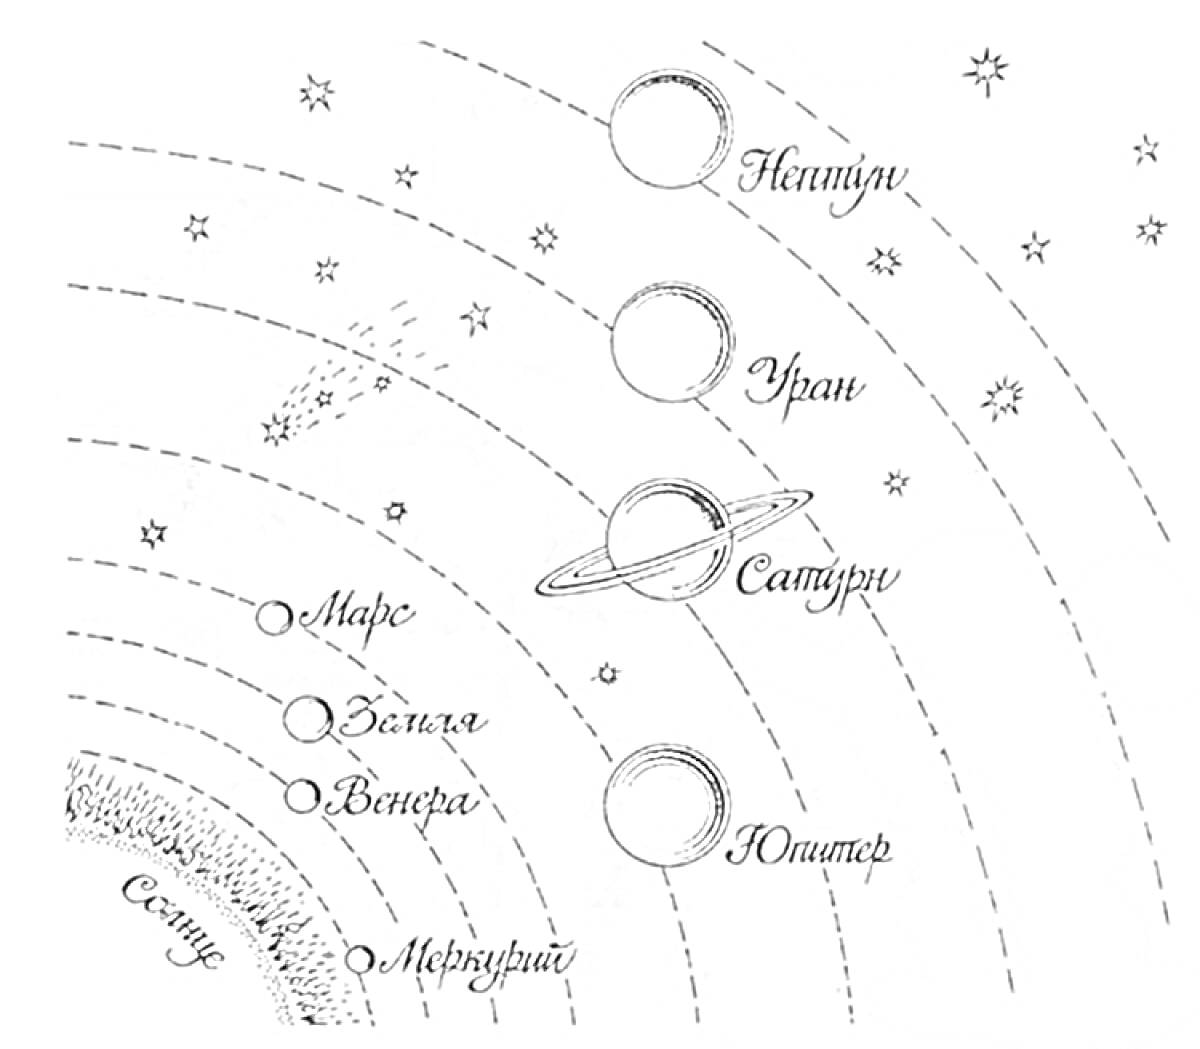 Раскраска Солнечная система с планетами (Нептун, Уран, Сатурн, Юпитер, Марс, Земля, Венера, Меркурий) и Солнцем